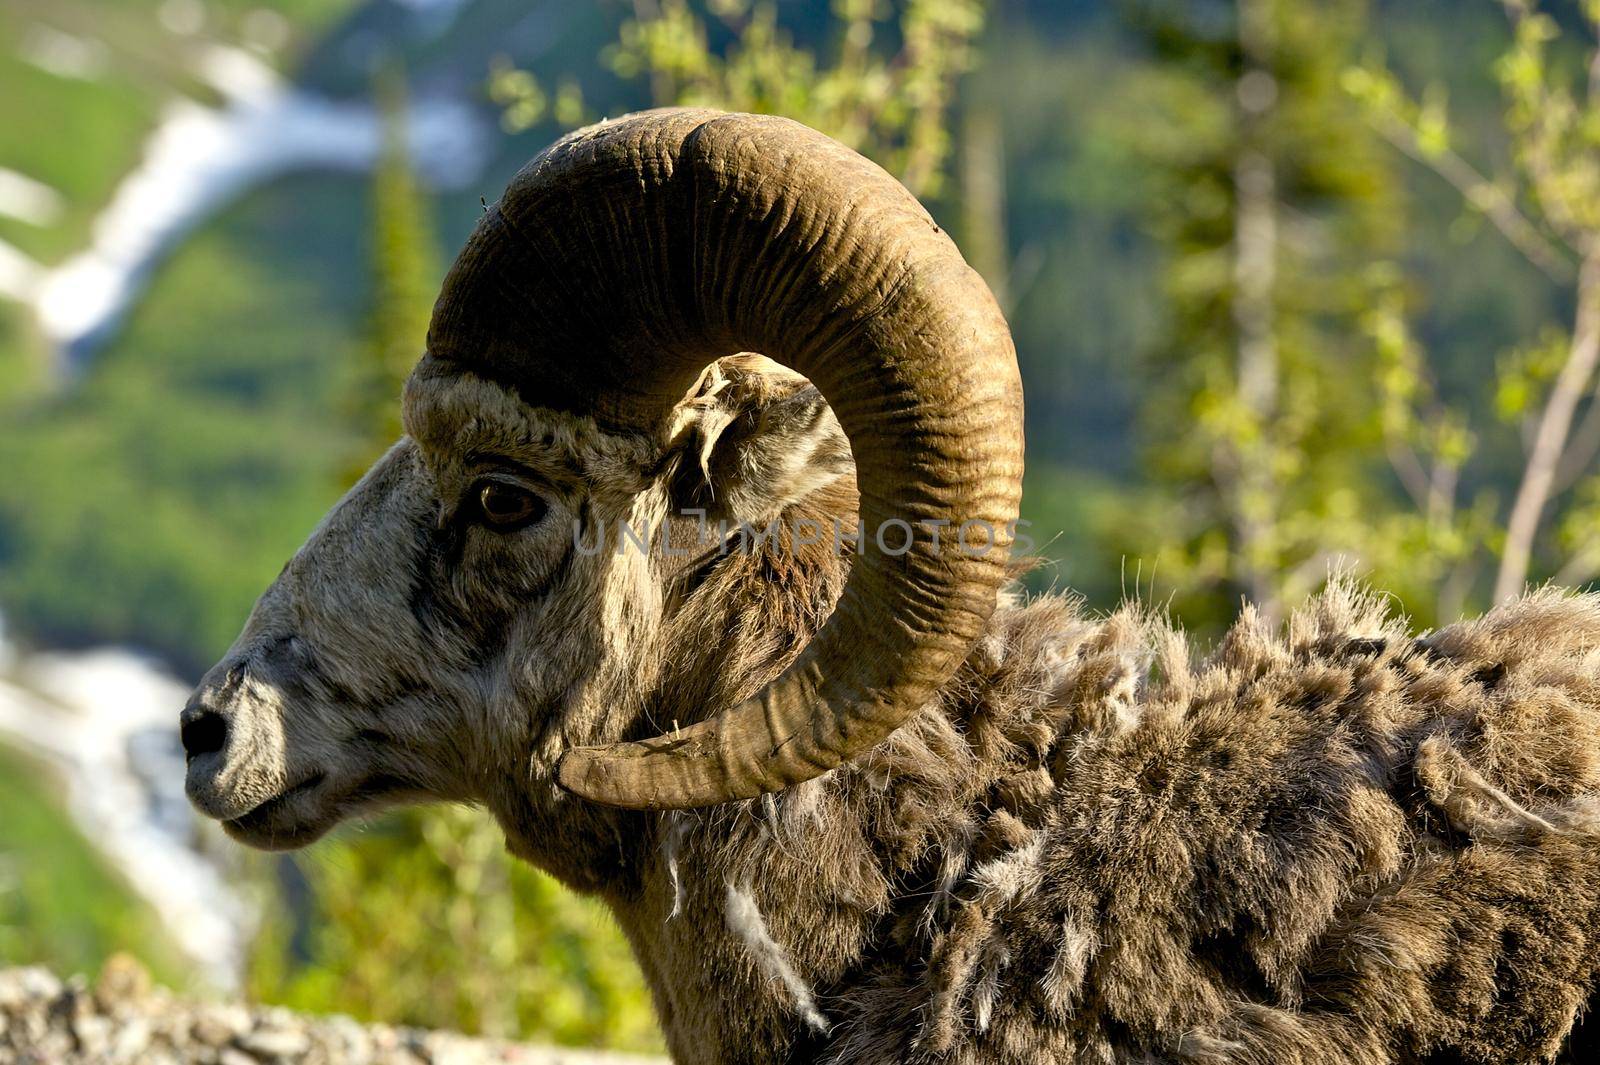 Bighorn Headshot - Montana Bighorn Sheep Head Closeup. Wildlife Photography Collection.